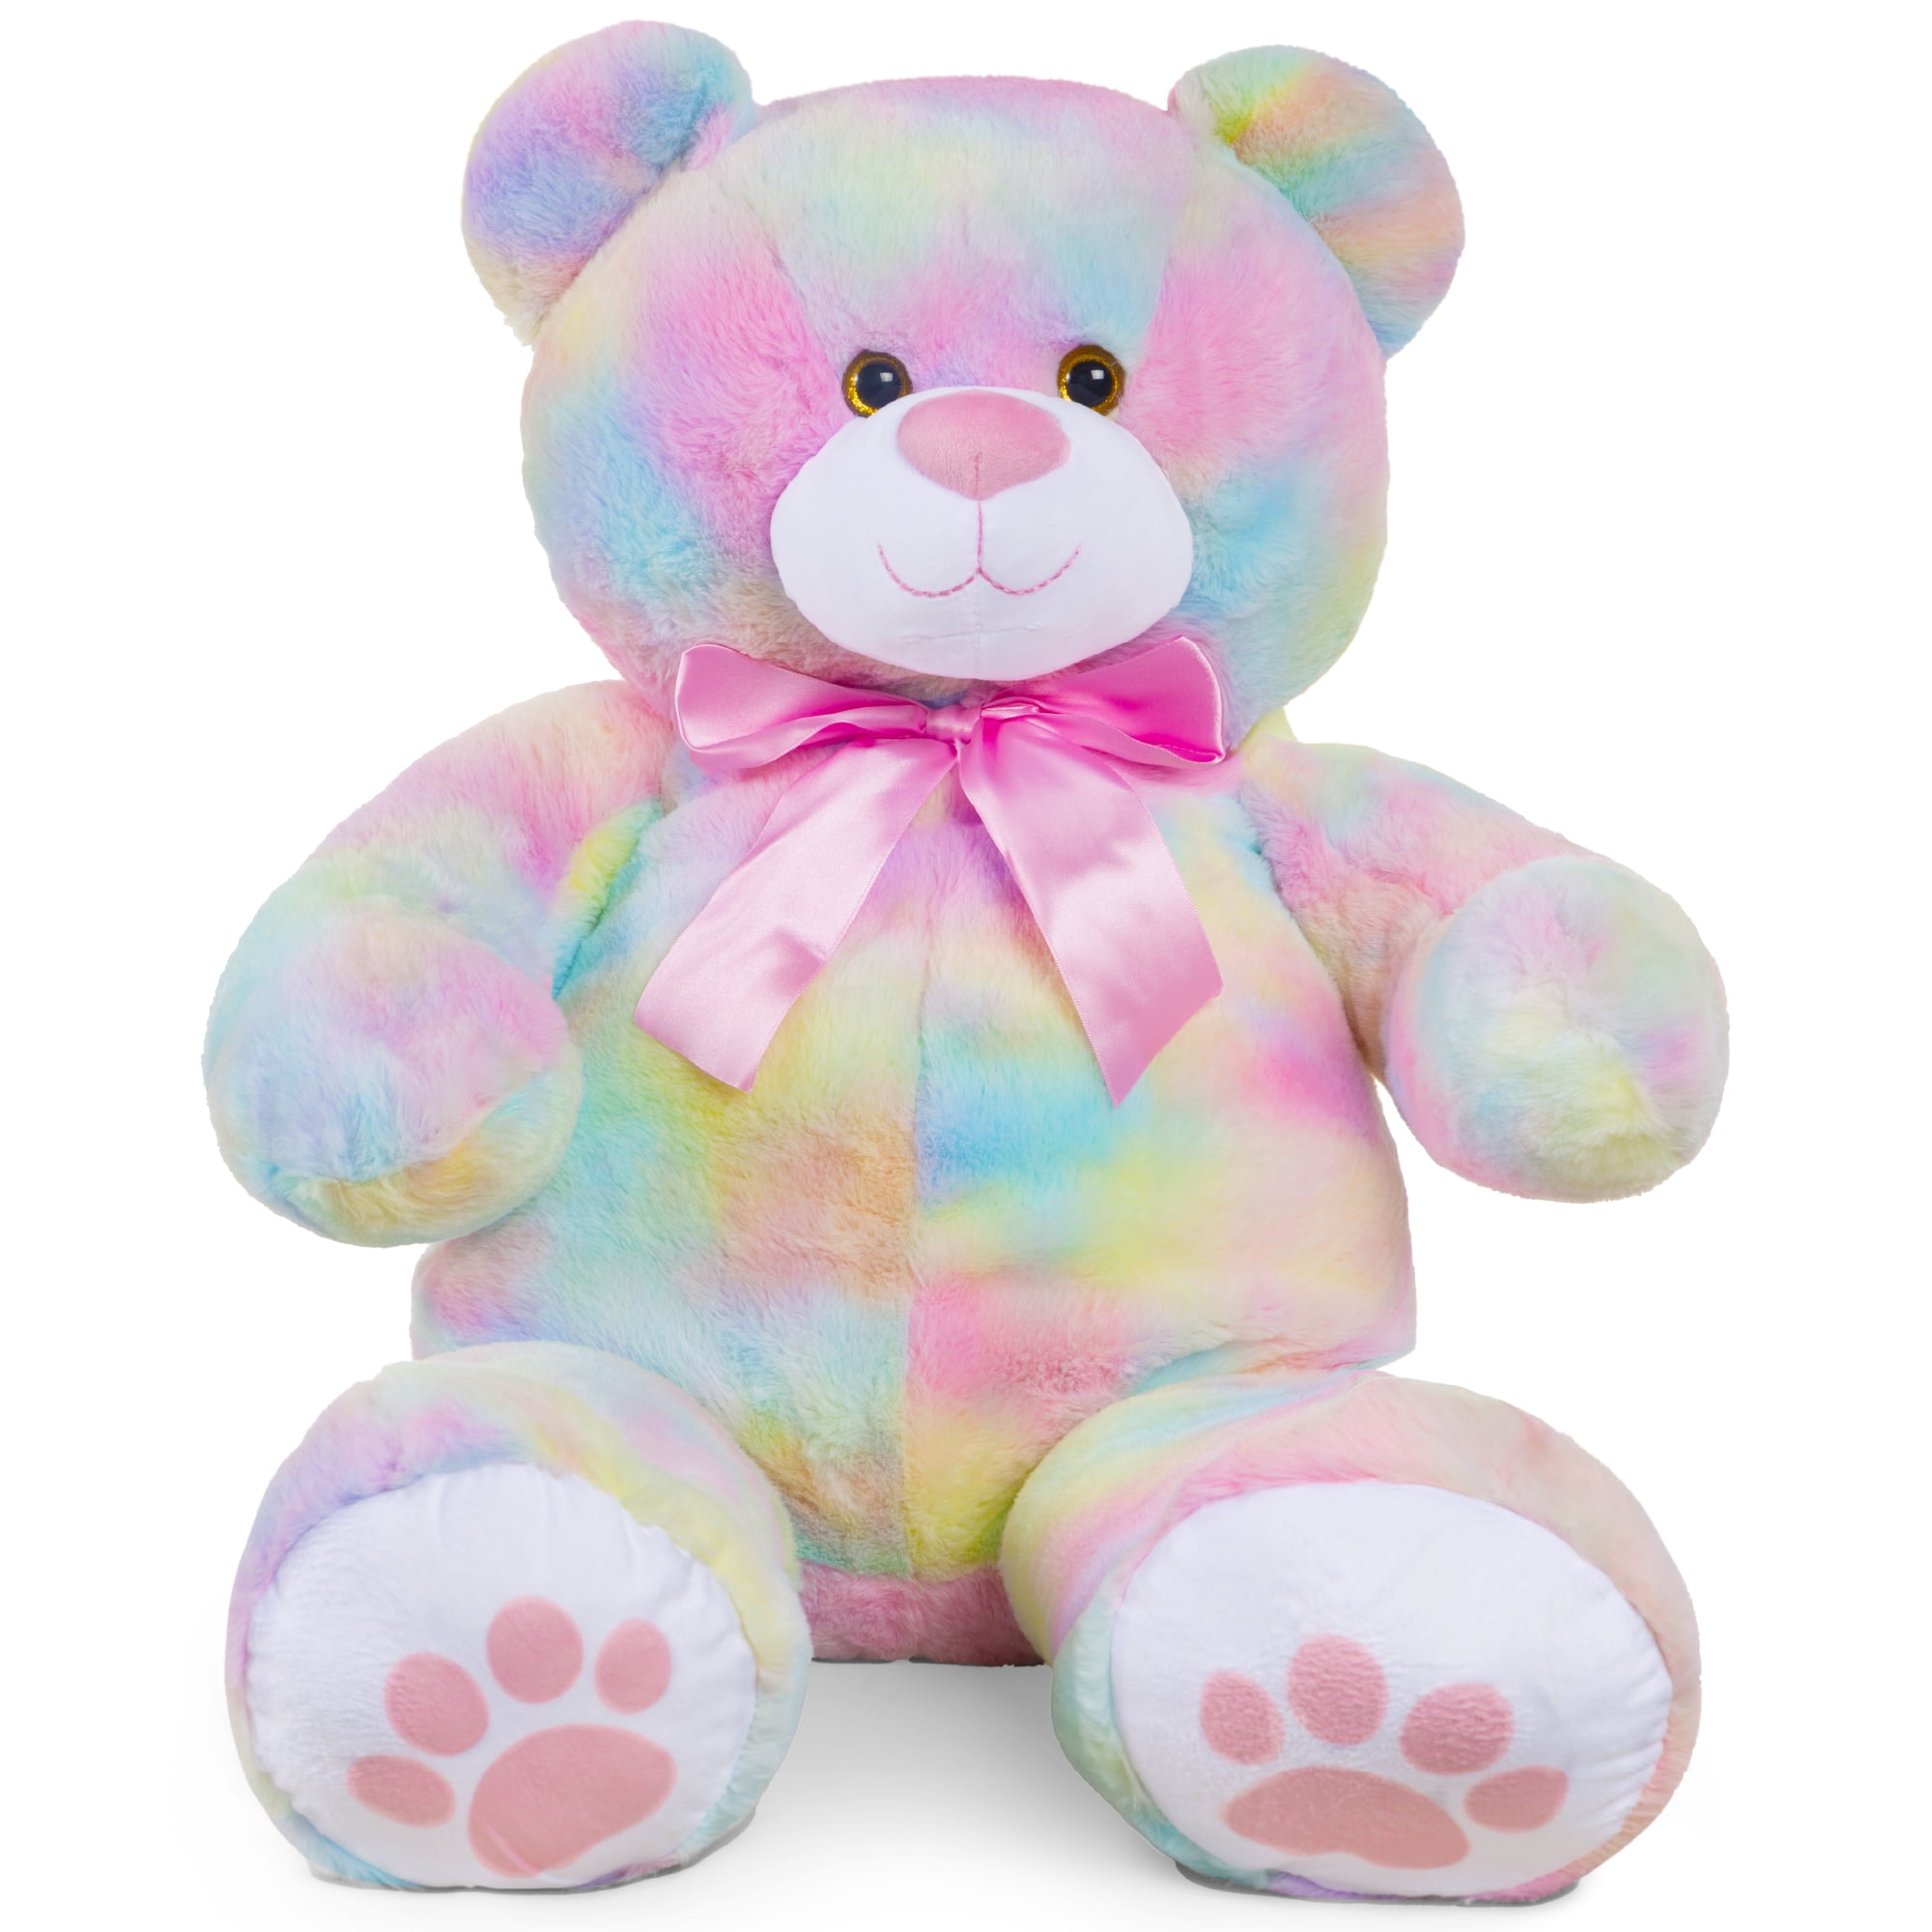 Pink plush teddy bear Giant huge 100cm soft cotton doll toys stuffed Xmas gifts 